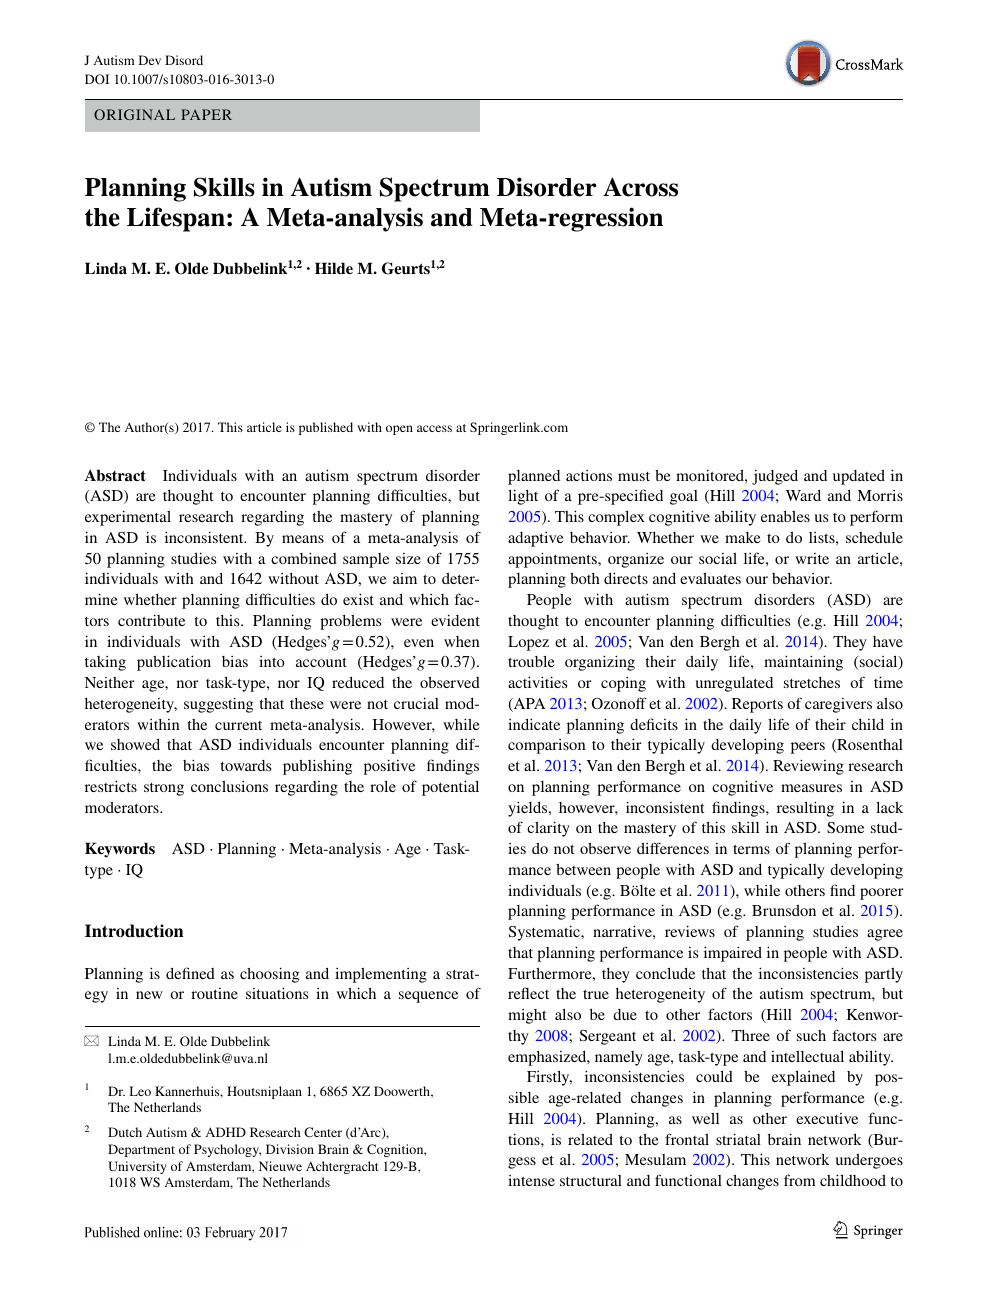 Planning Skills In Autism Spectrum Disorder Across The within Autism Social Skills Profile 2 Scoring Interpretation